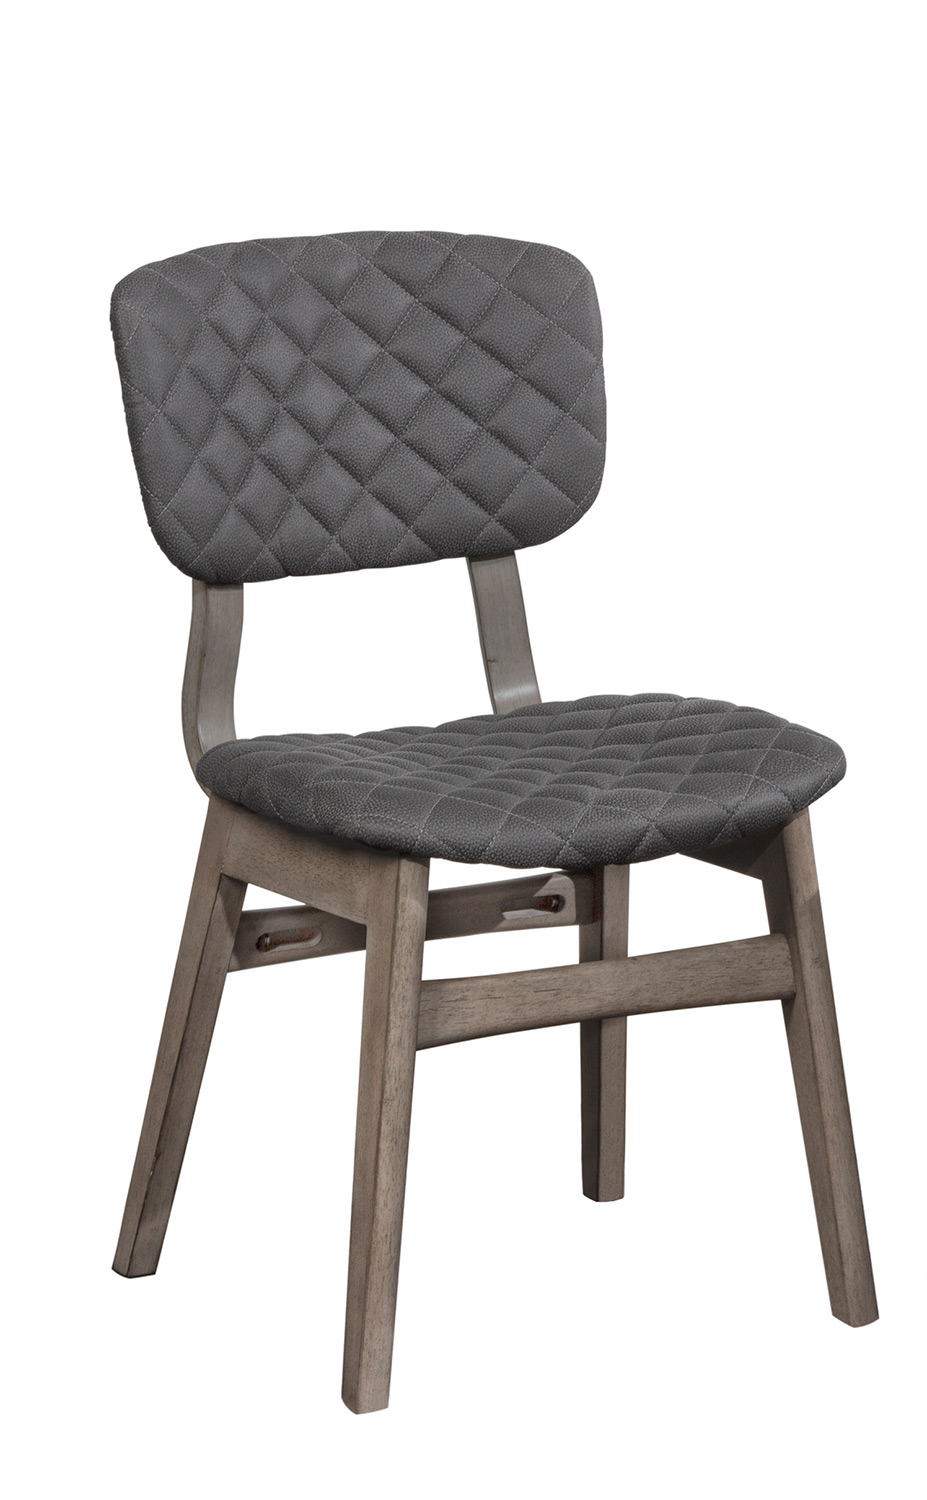 Hillsdale Alden Bay Modern Diamond Stitch Dining Chair - Weathered Gray- Set of 2